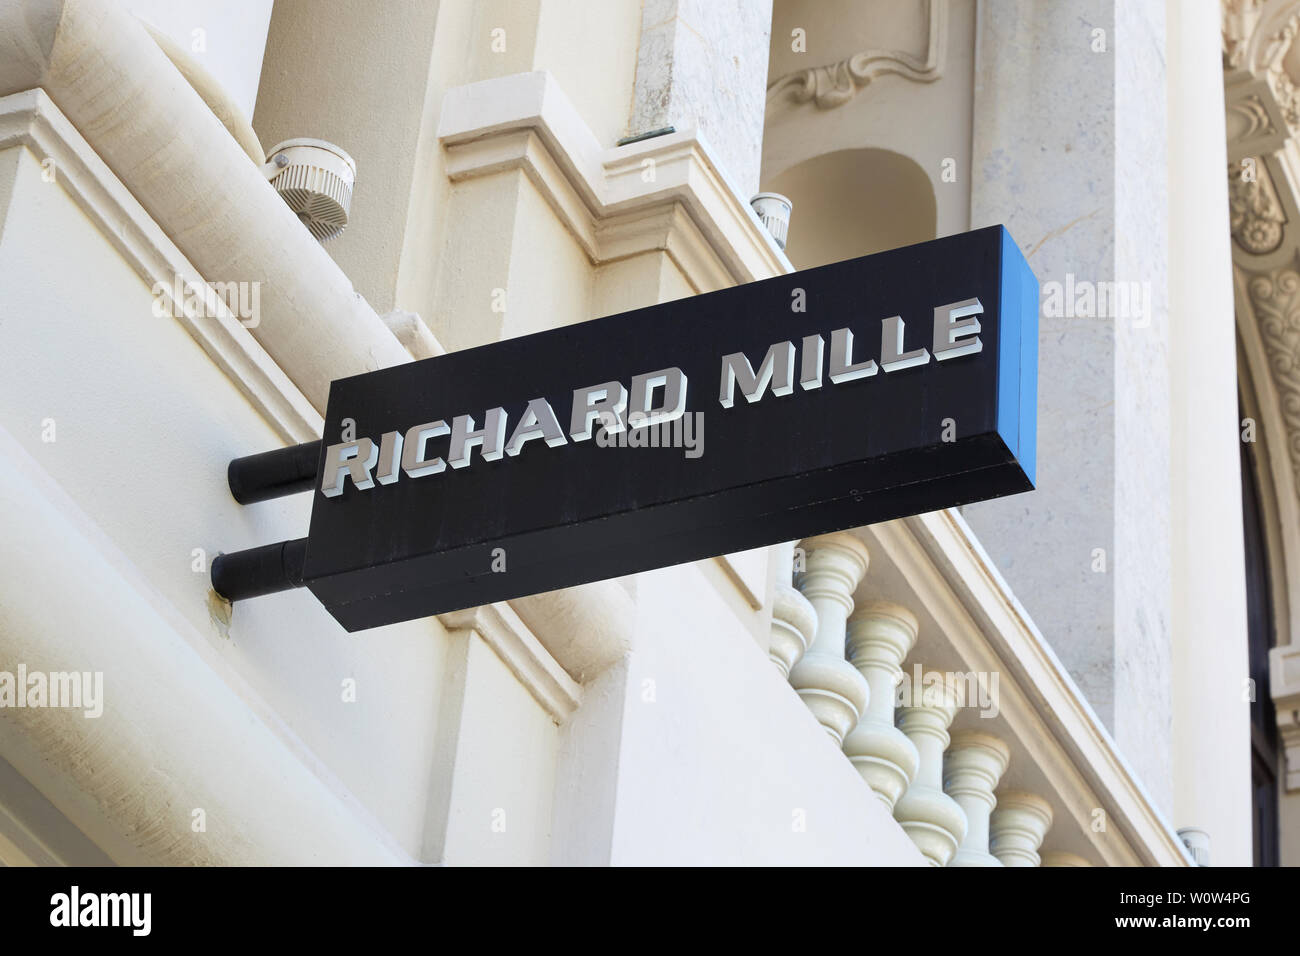 MONTE CARLO, Monaco - Agosto 21, 2016: Richard Mille signo tienda de relojes de lujo en Monte Carlo, Mónaco. Foto de stock